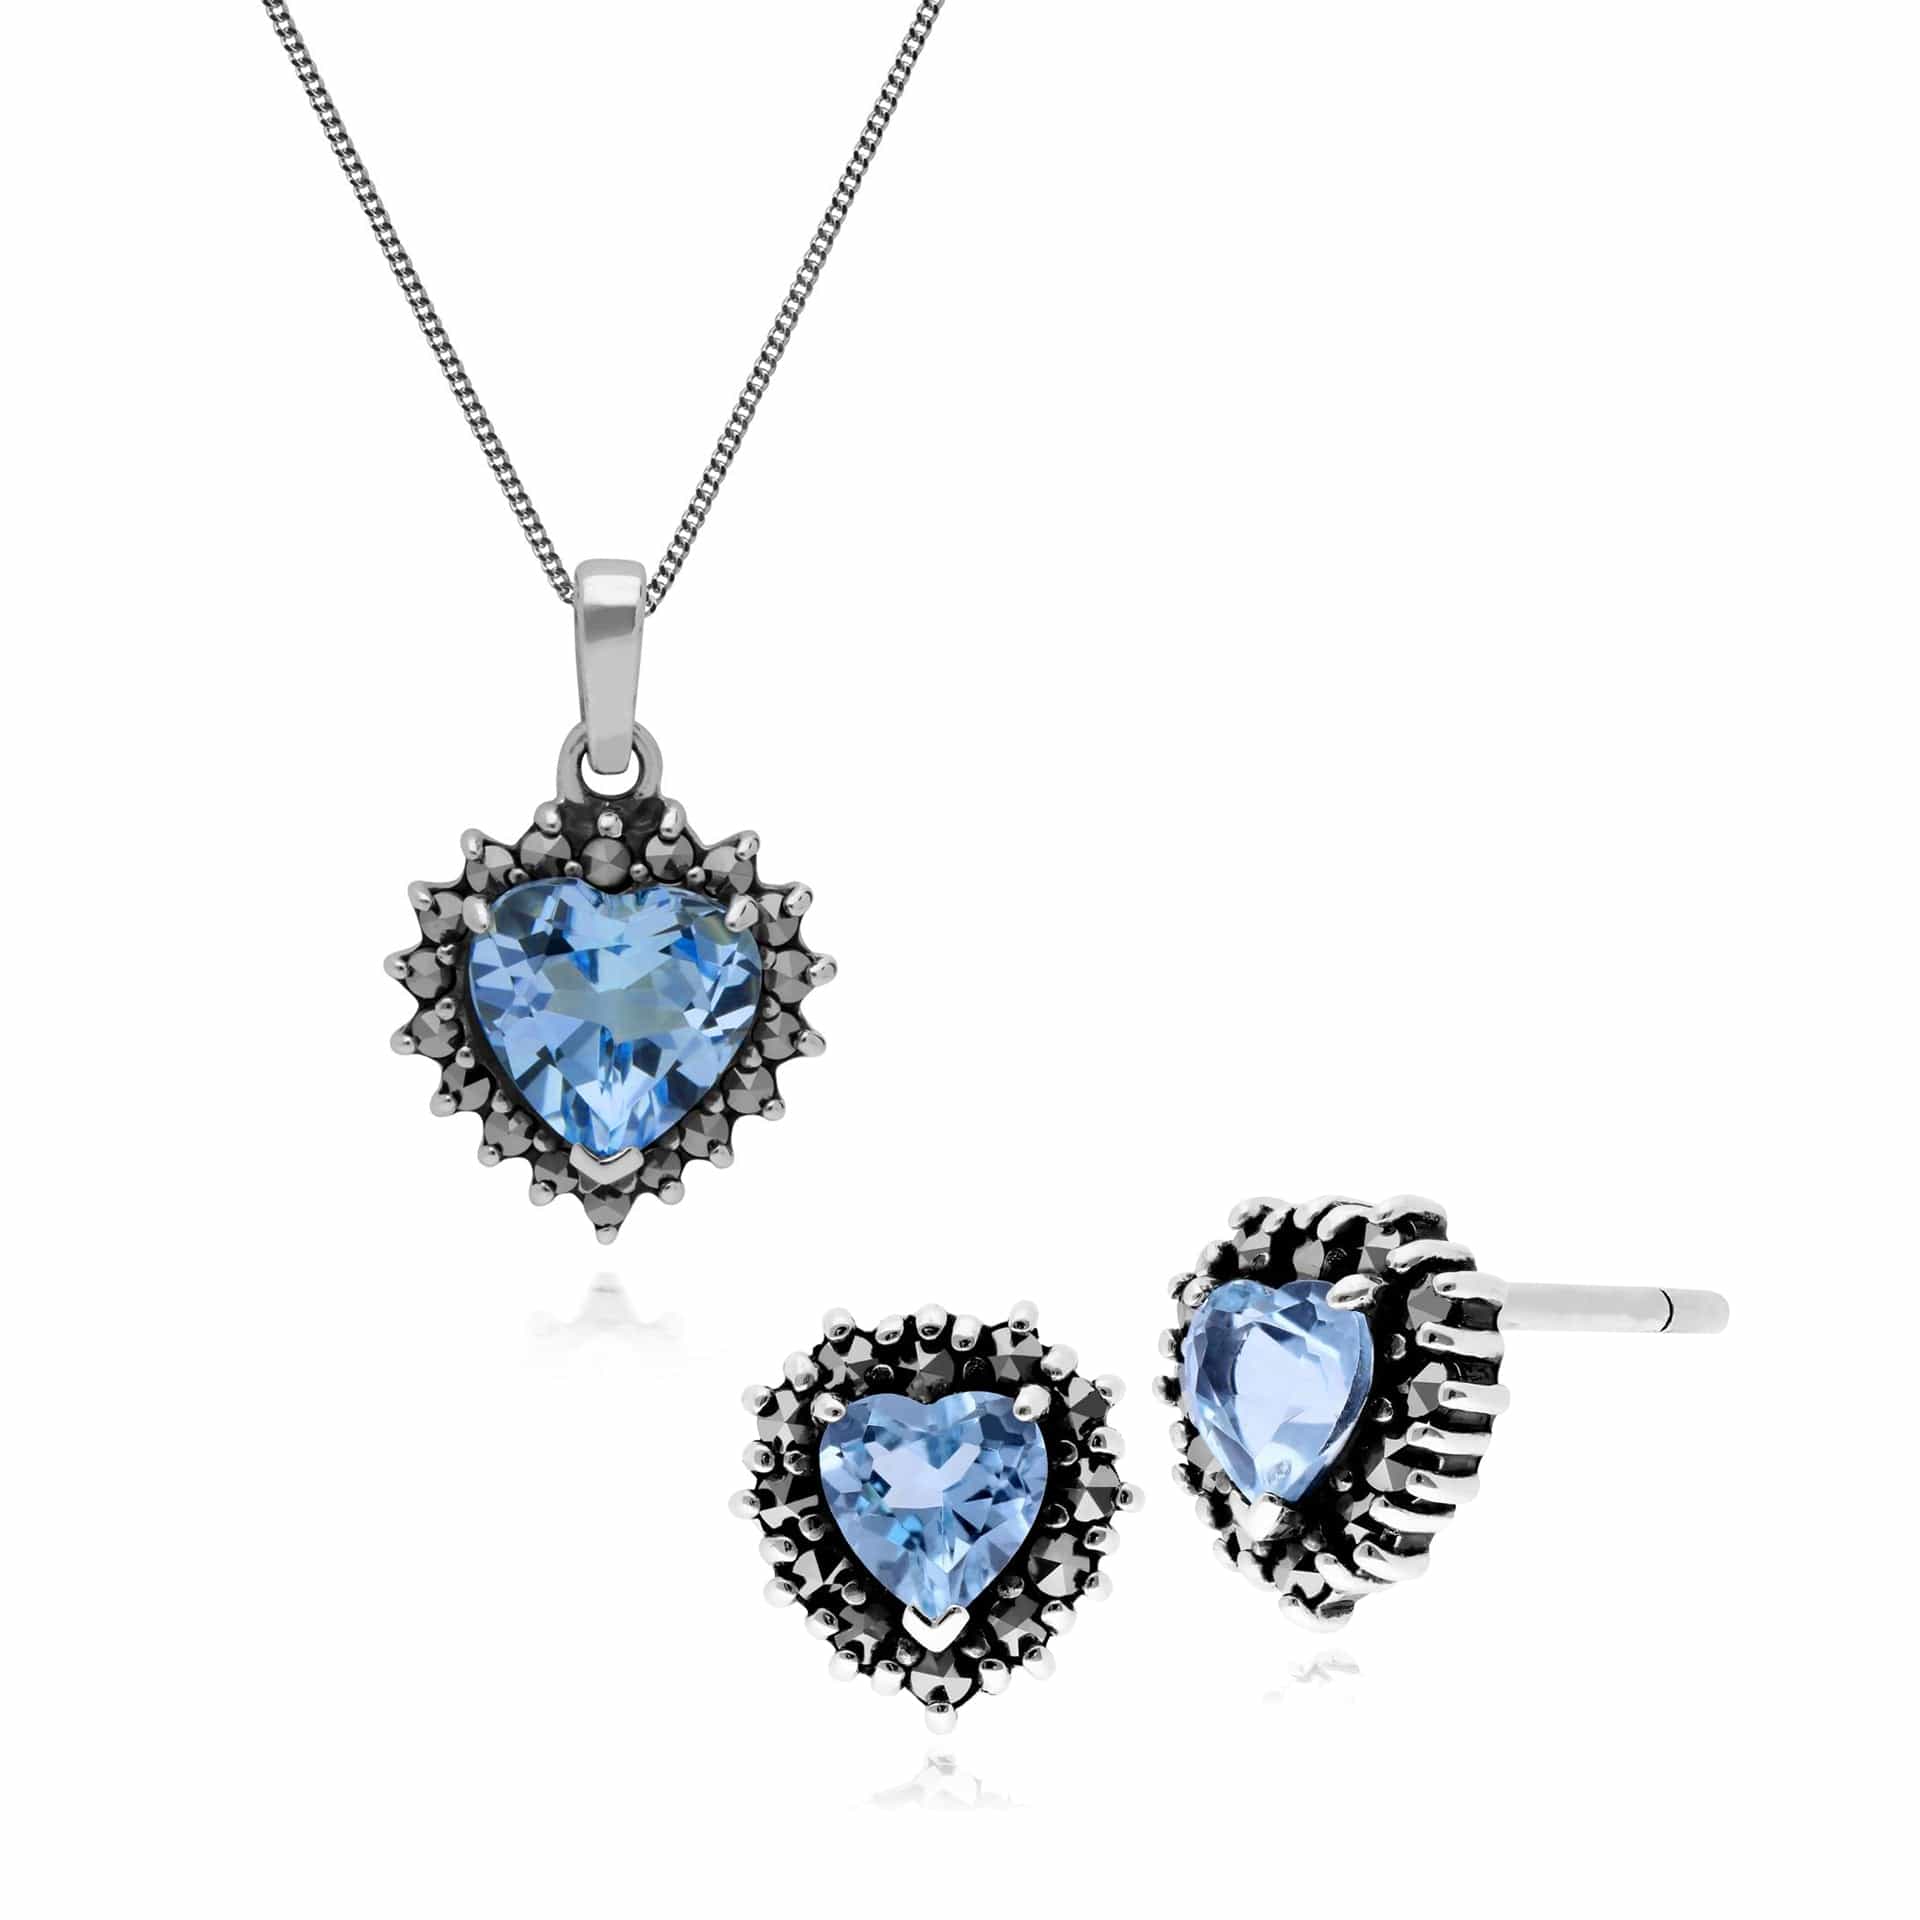 214E725705925-214P301203925 Art Deco Style Blue Topaz & Marcasite Heart Stud Earrings & Necklace Set in 925 Sterling Silver 1